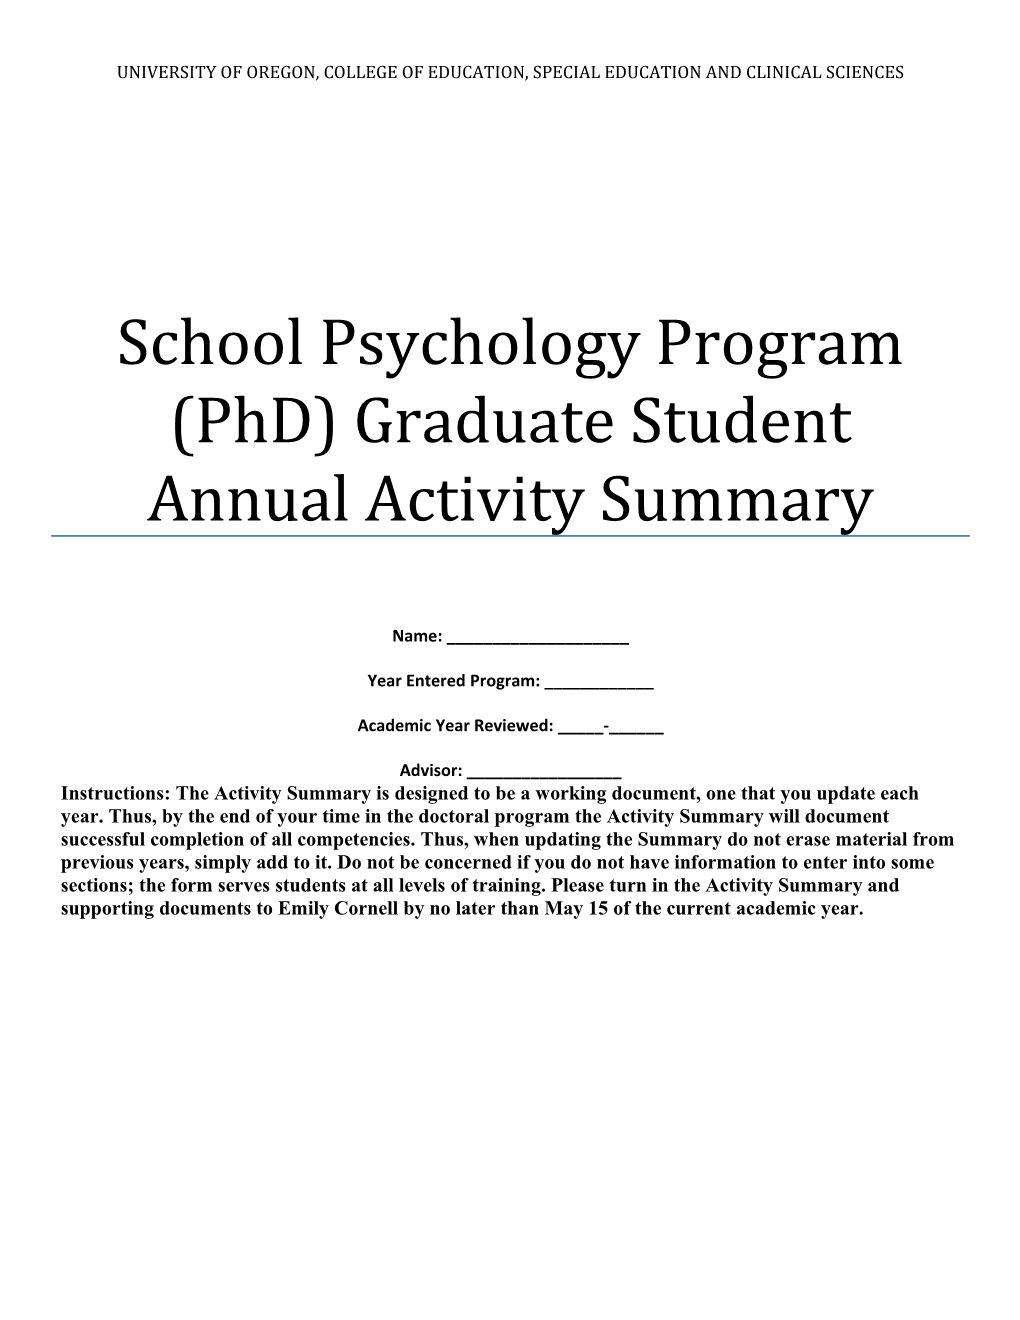 School Psychology Program (Phd) Graduate Student Annual Activity Summary